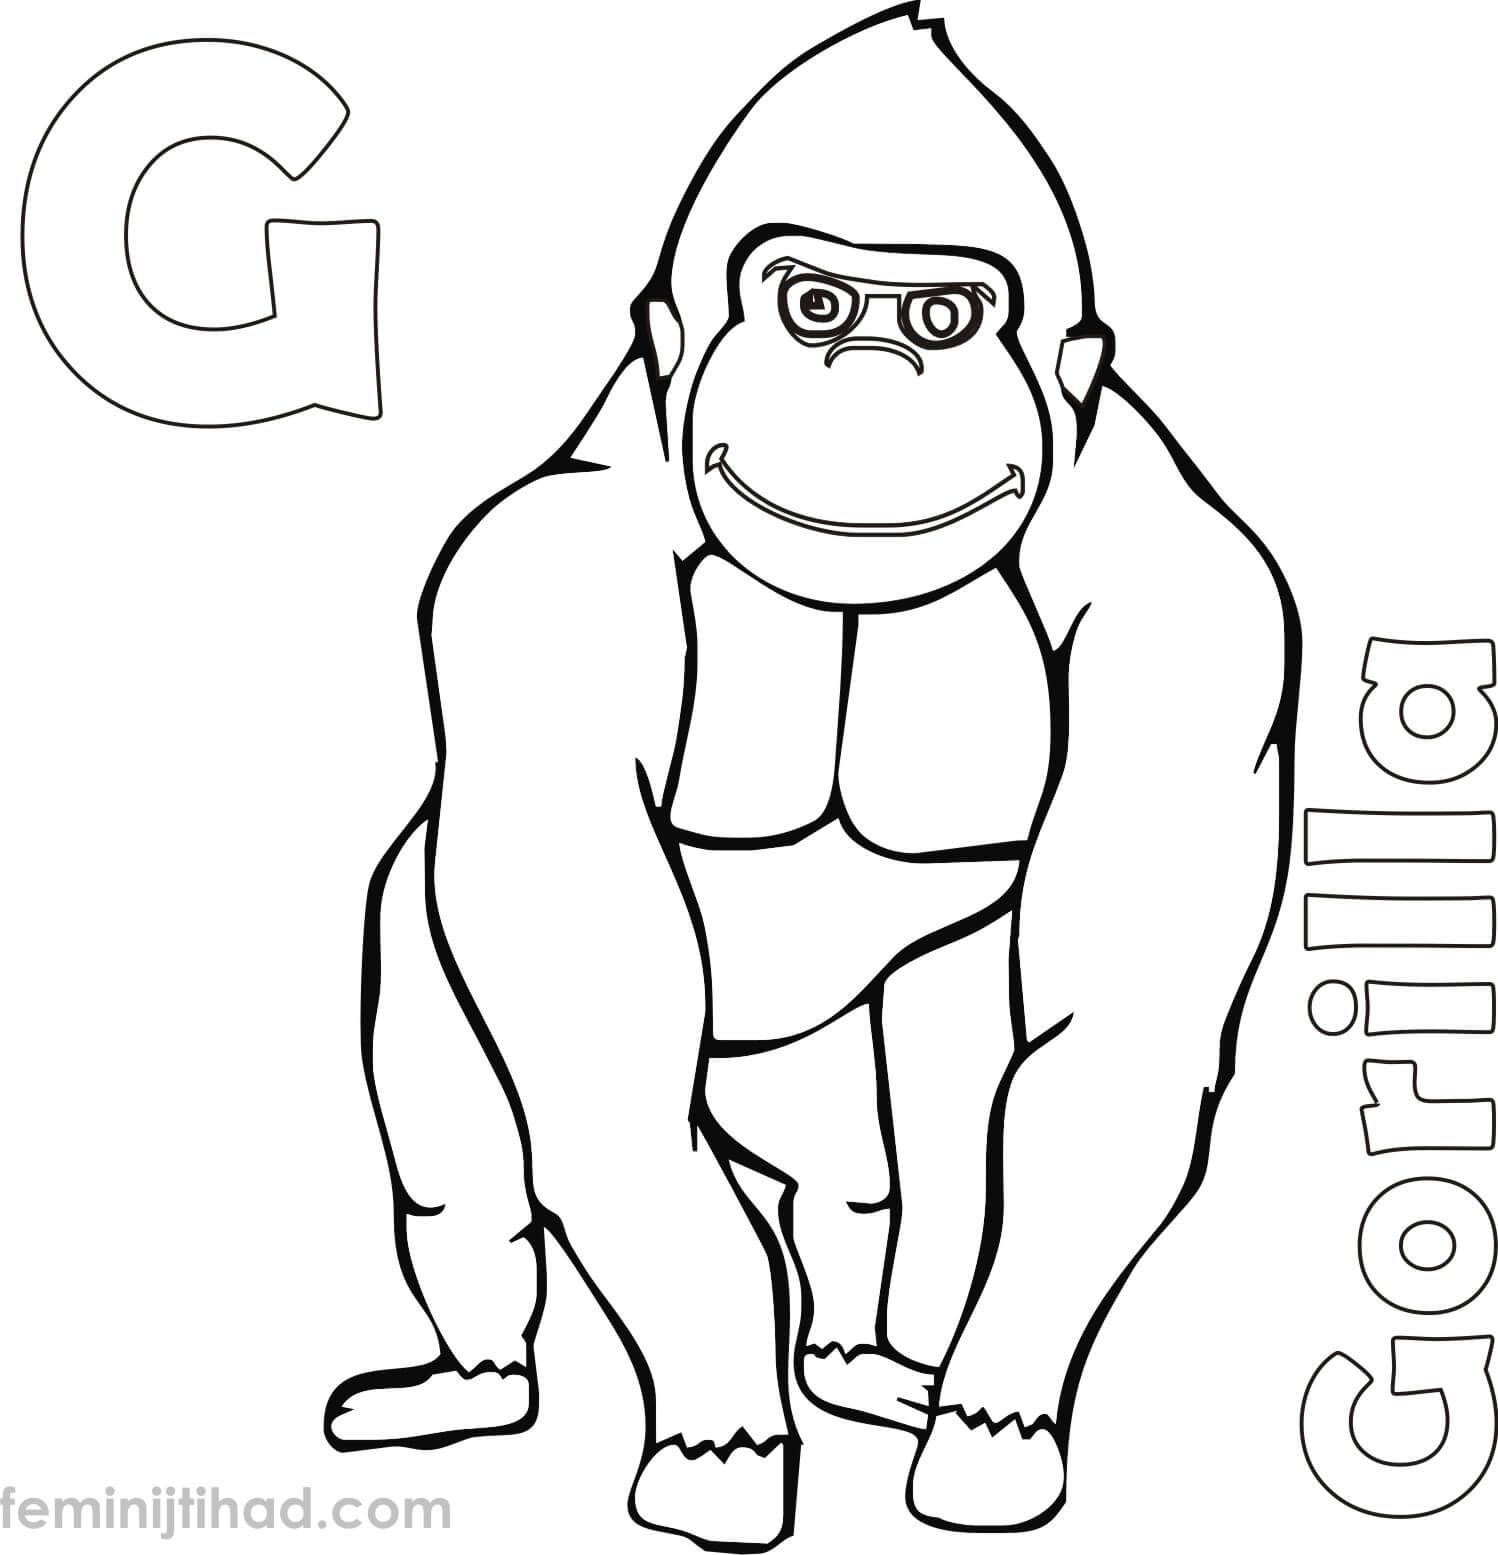 Gorilla coloring pages pdf printable